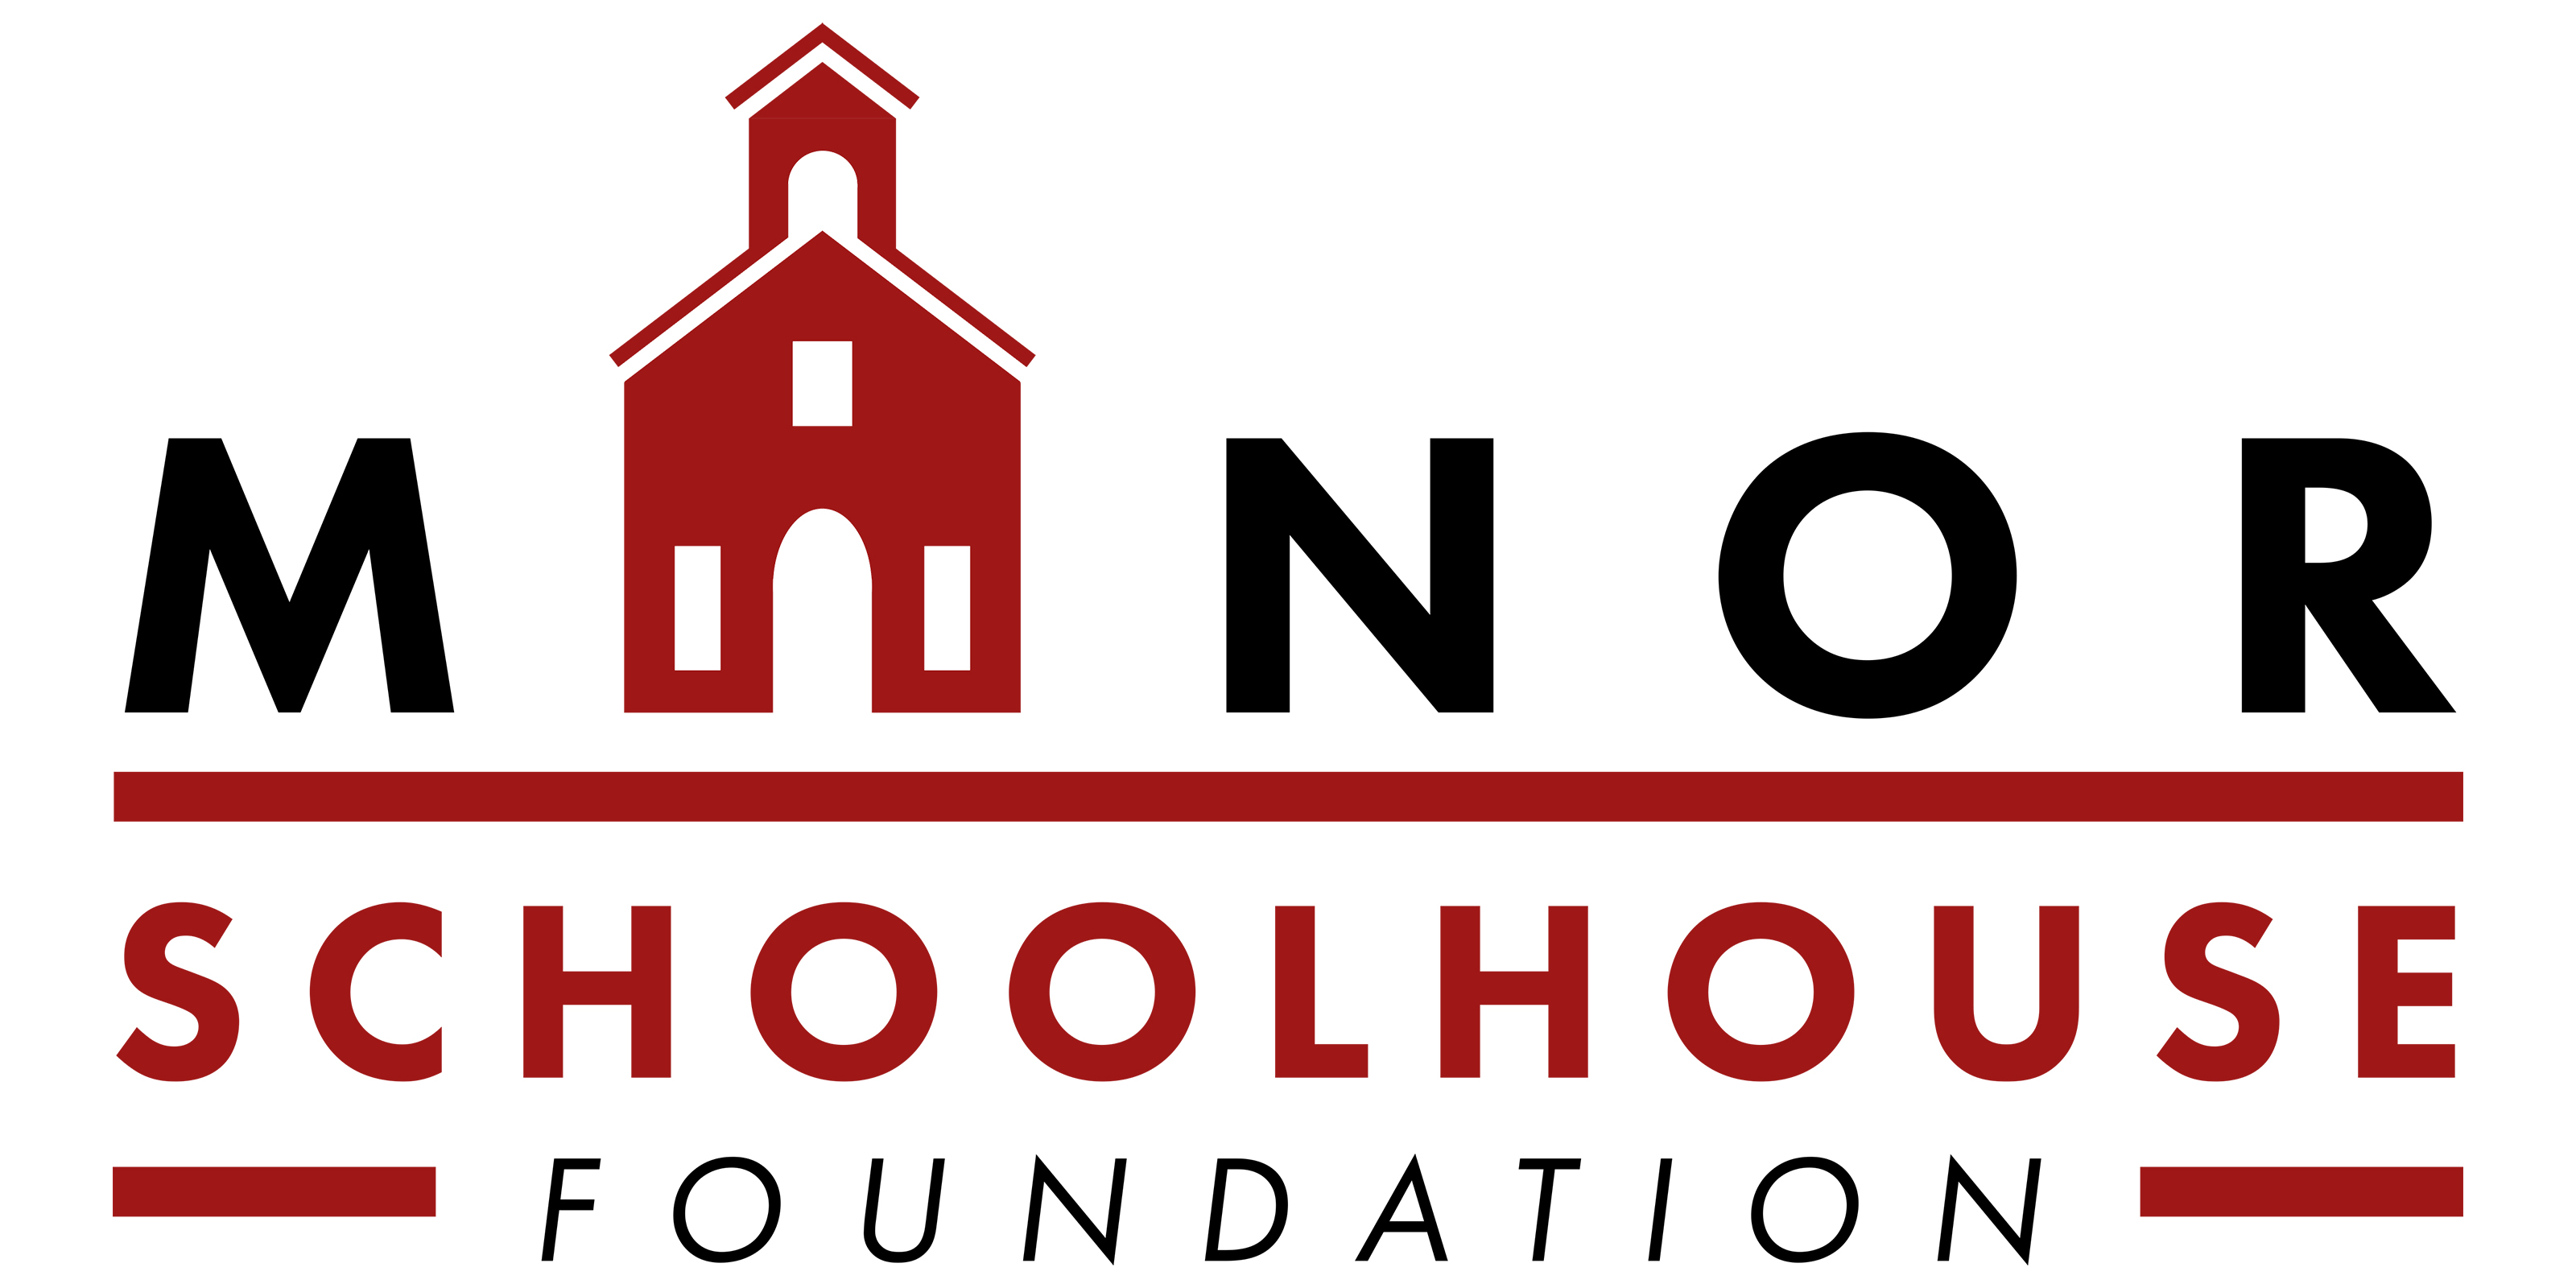 Manor Schoolhouse Foundation logo